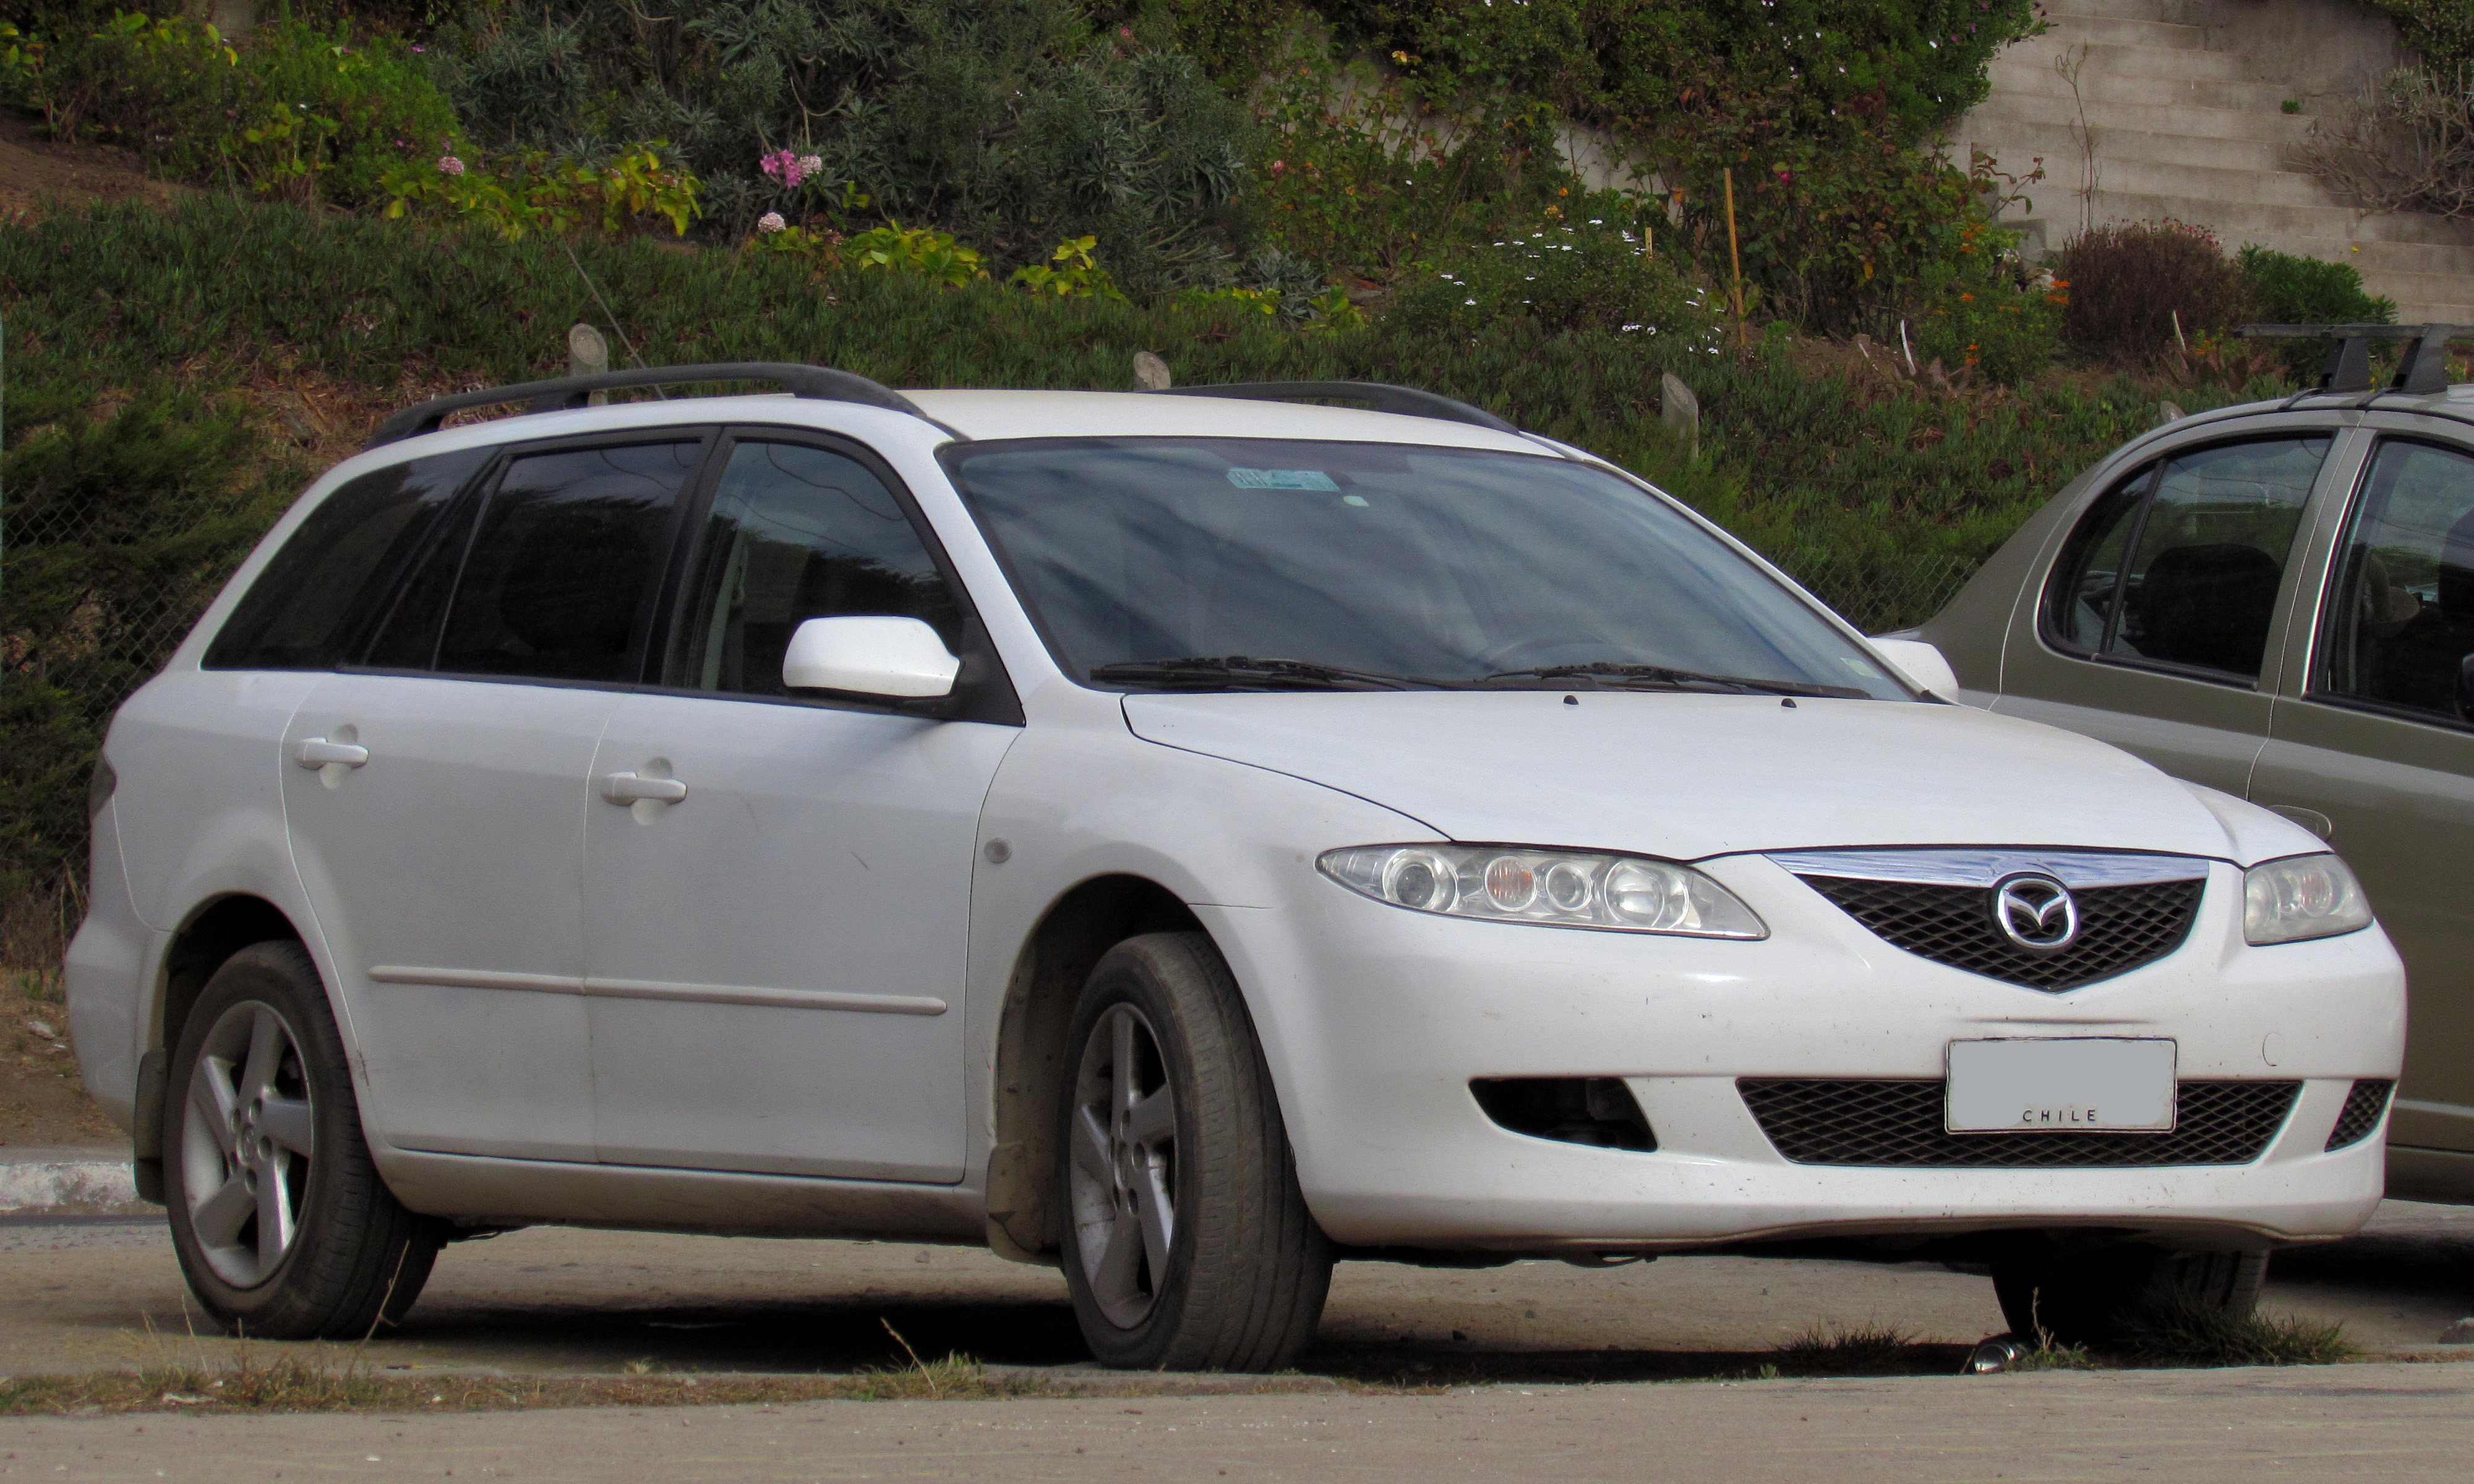 File:Mazda 6 Wagon 2004 (35396443175).jpg - Wikimedia Commons